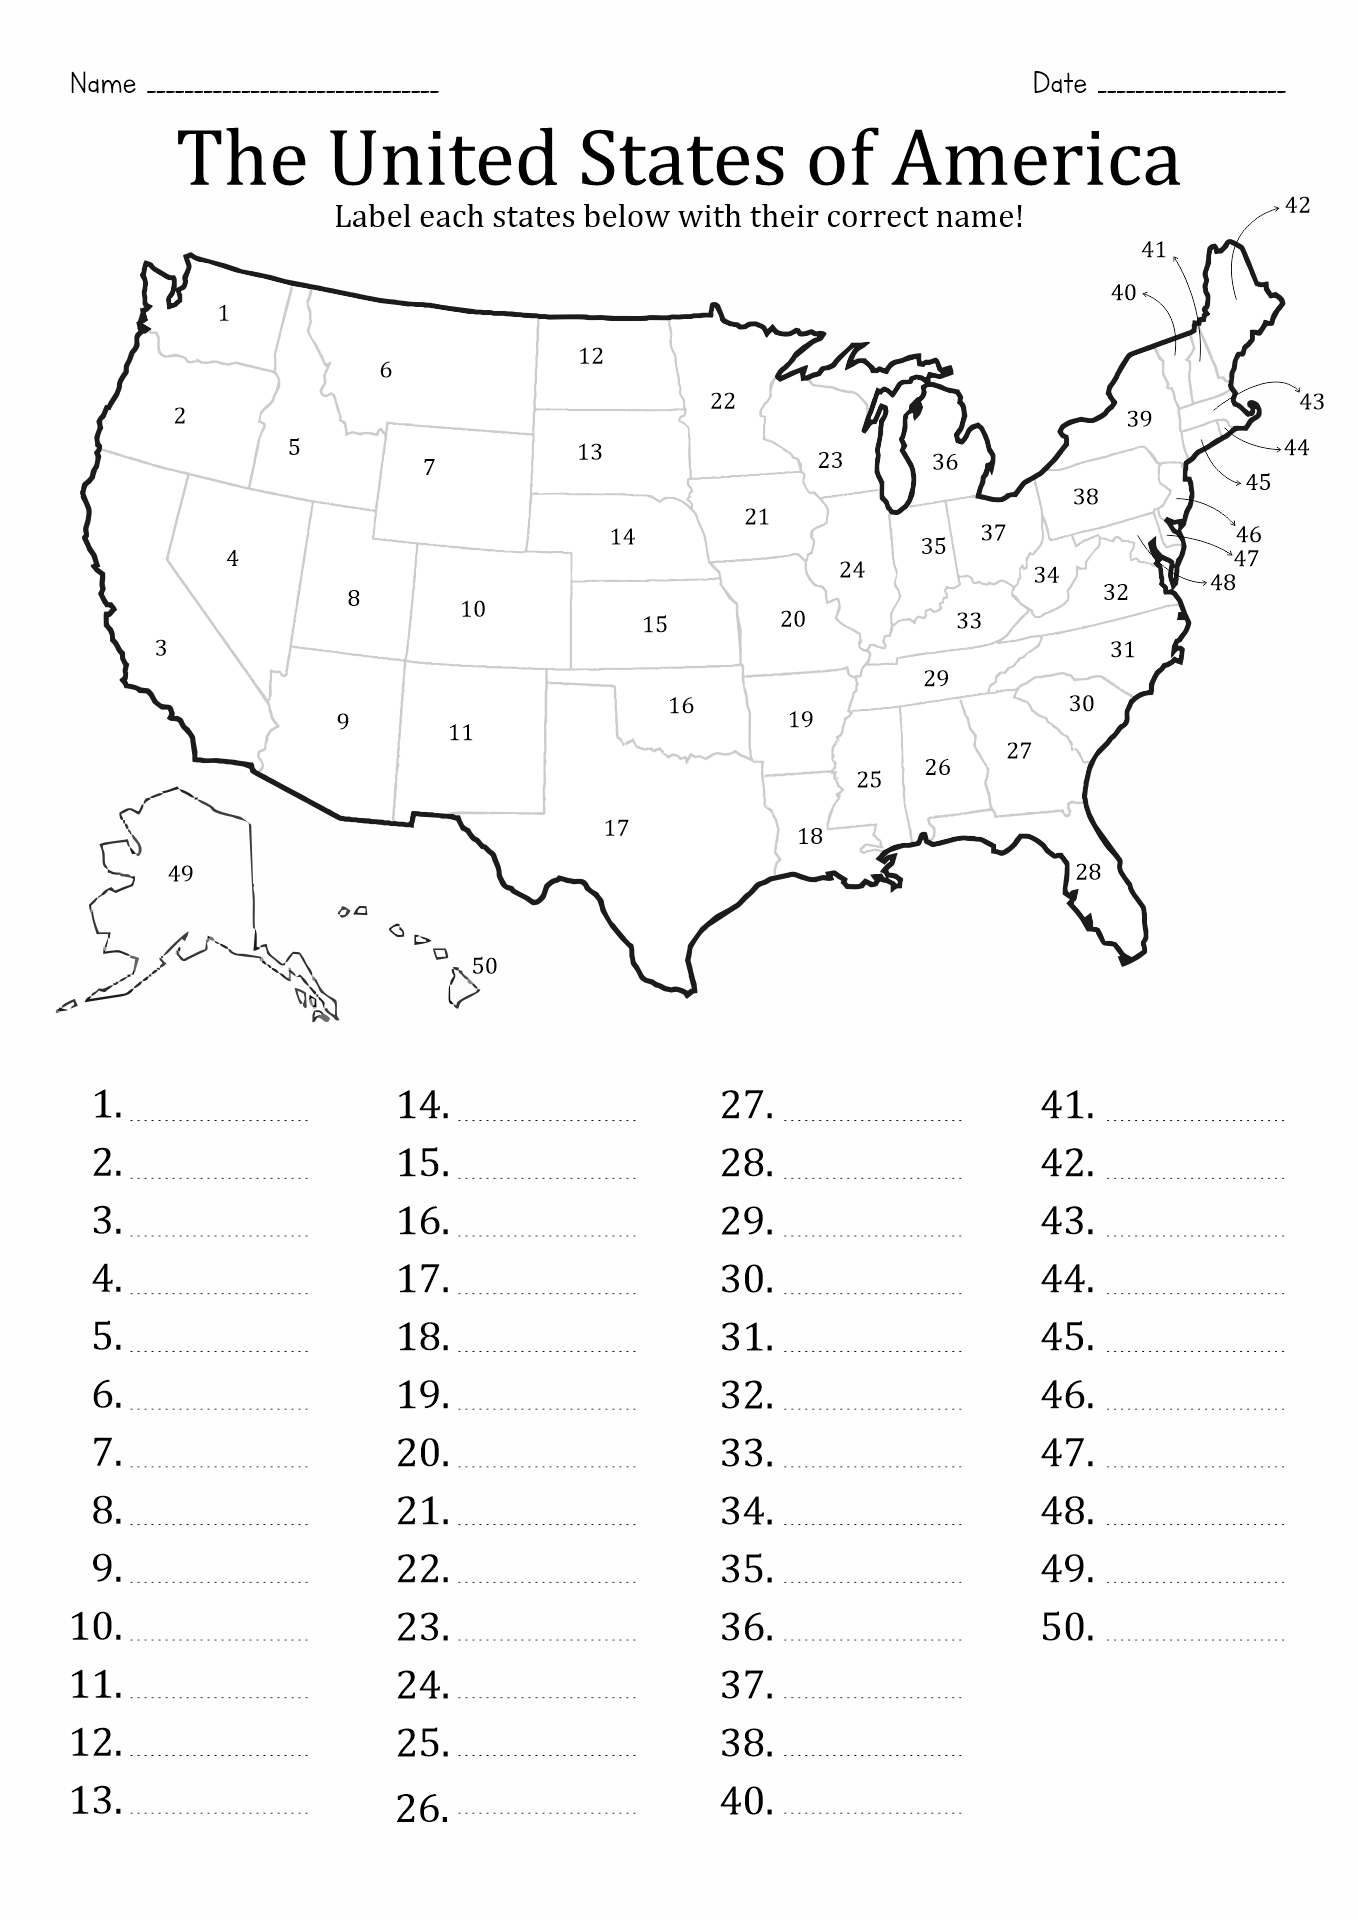 printable-list-of-the-50-states